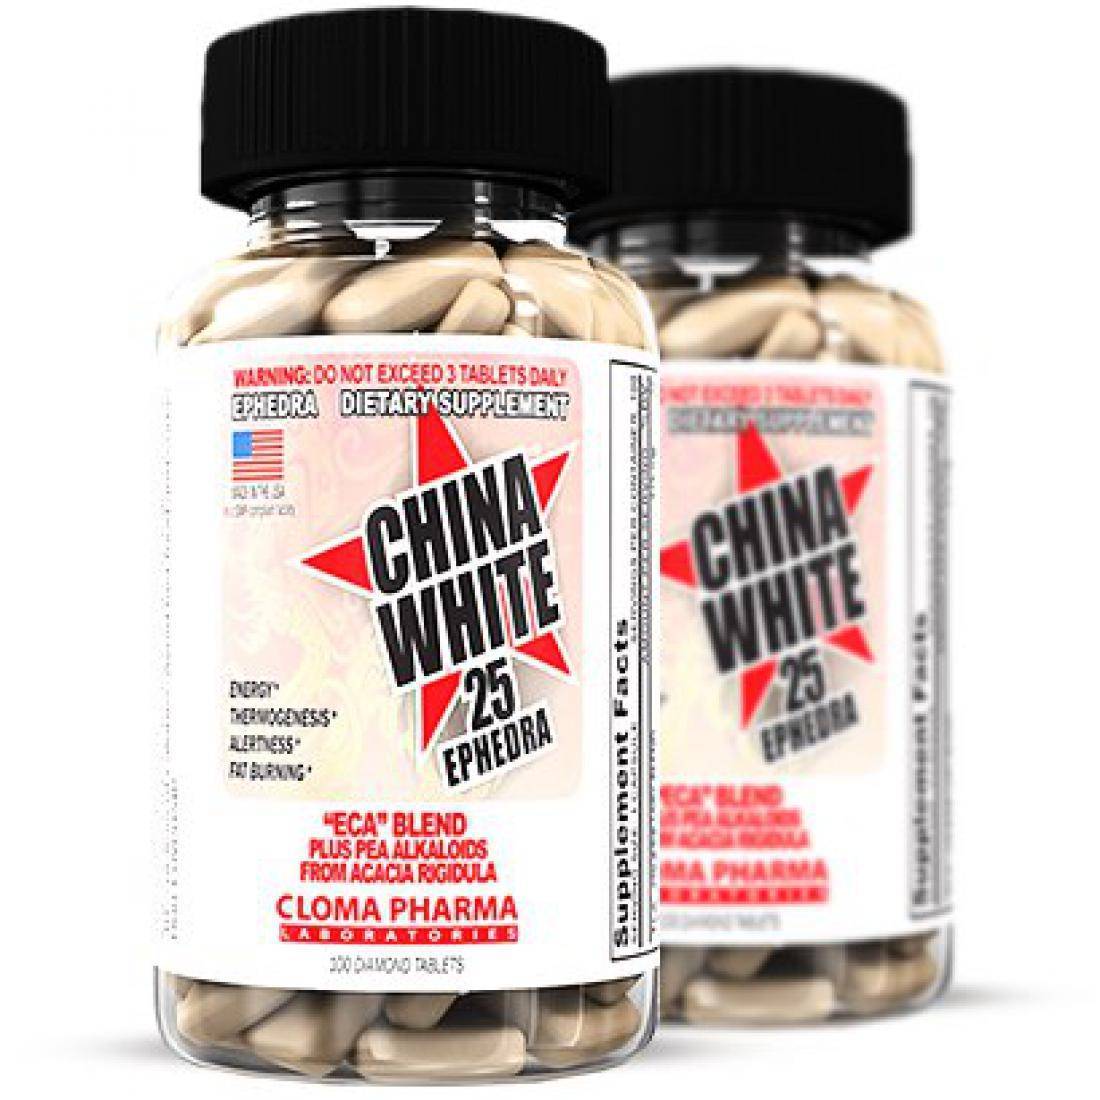 Сжигание жира - отзывы о china white 25 cloma рharma